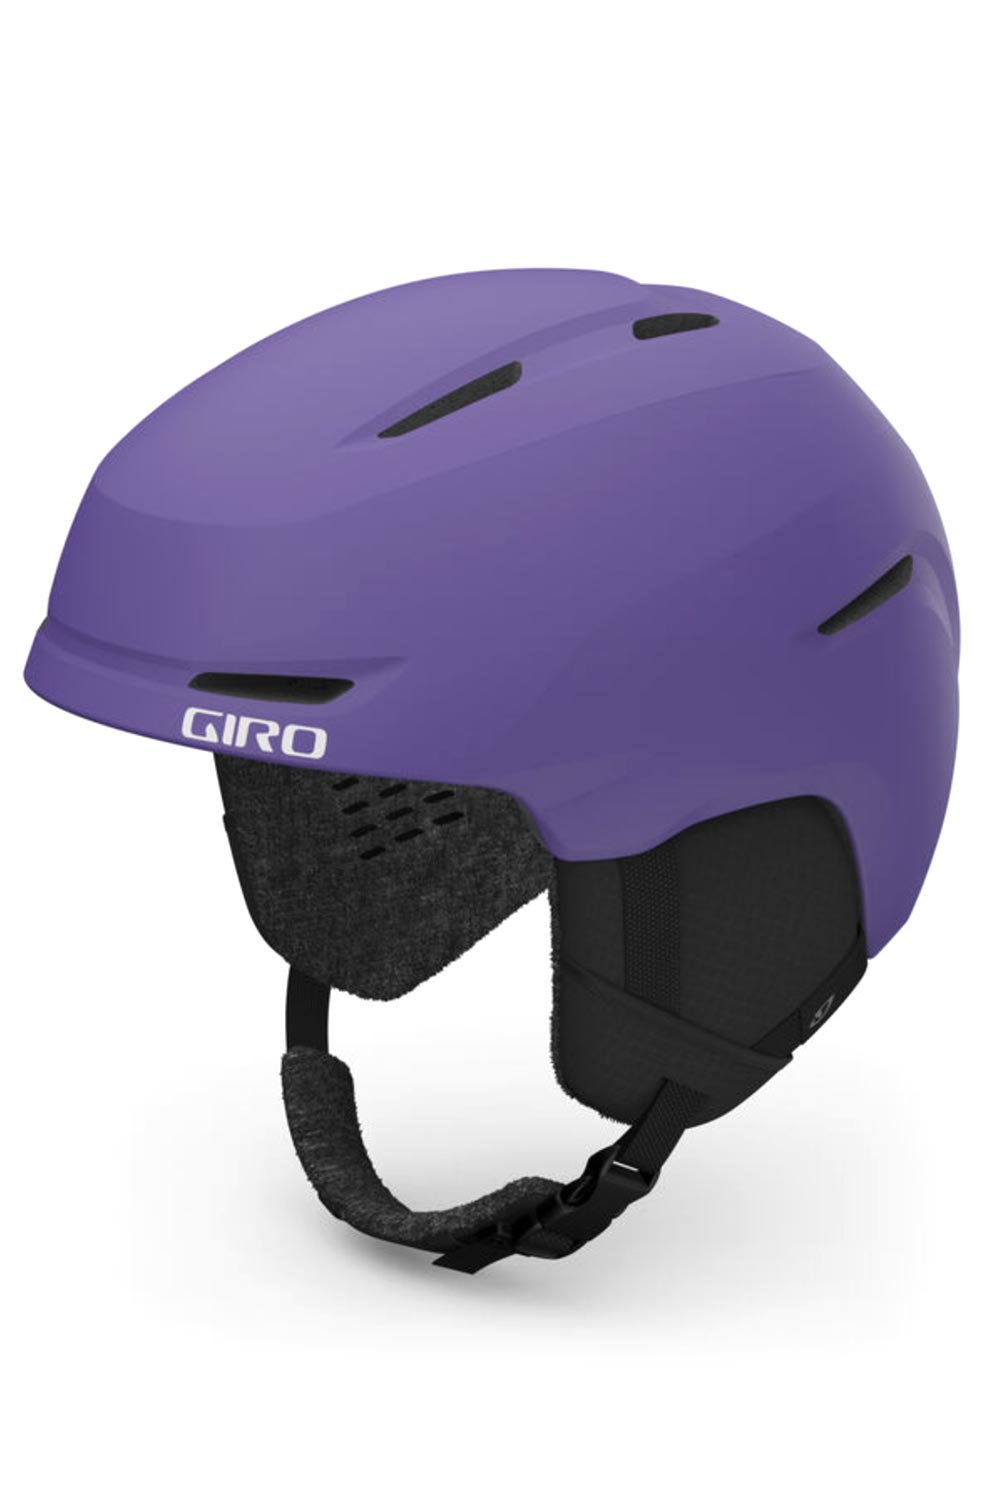 Kids' Giro Spur ski helmet, purple